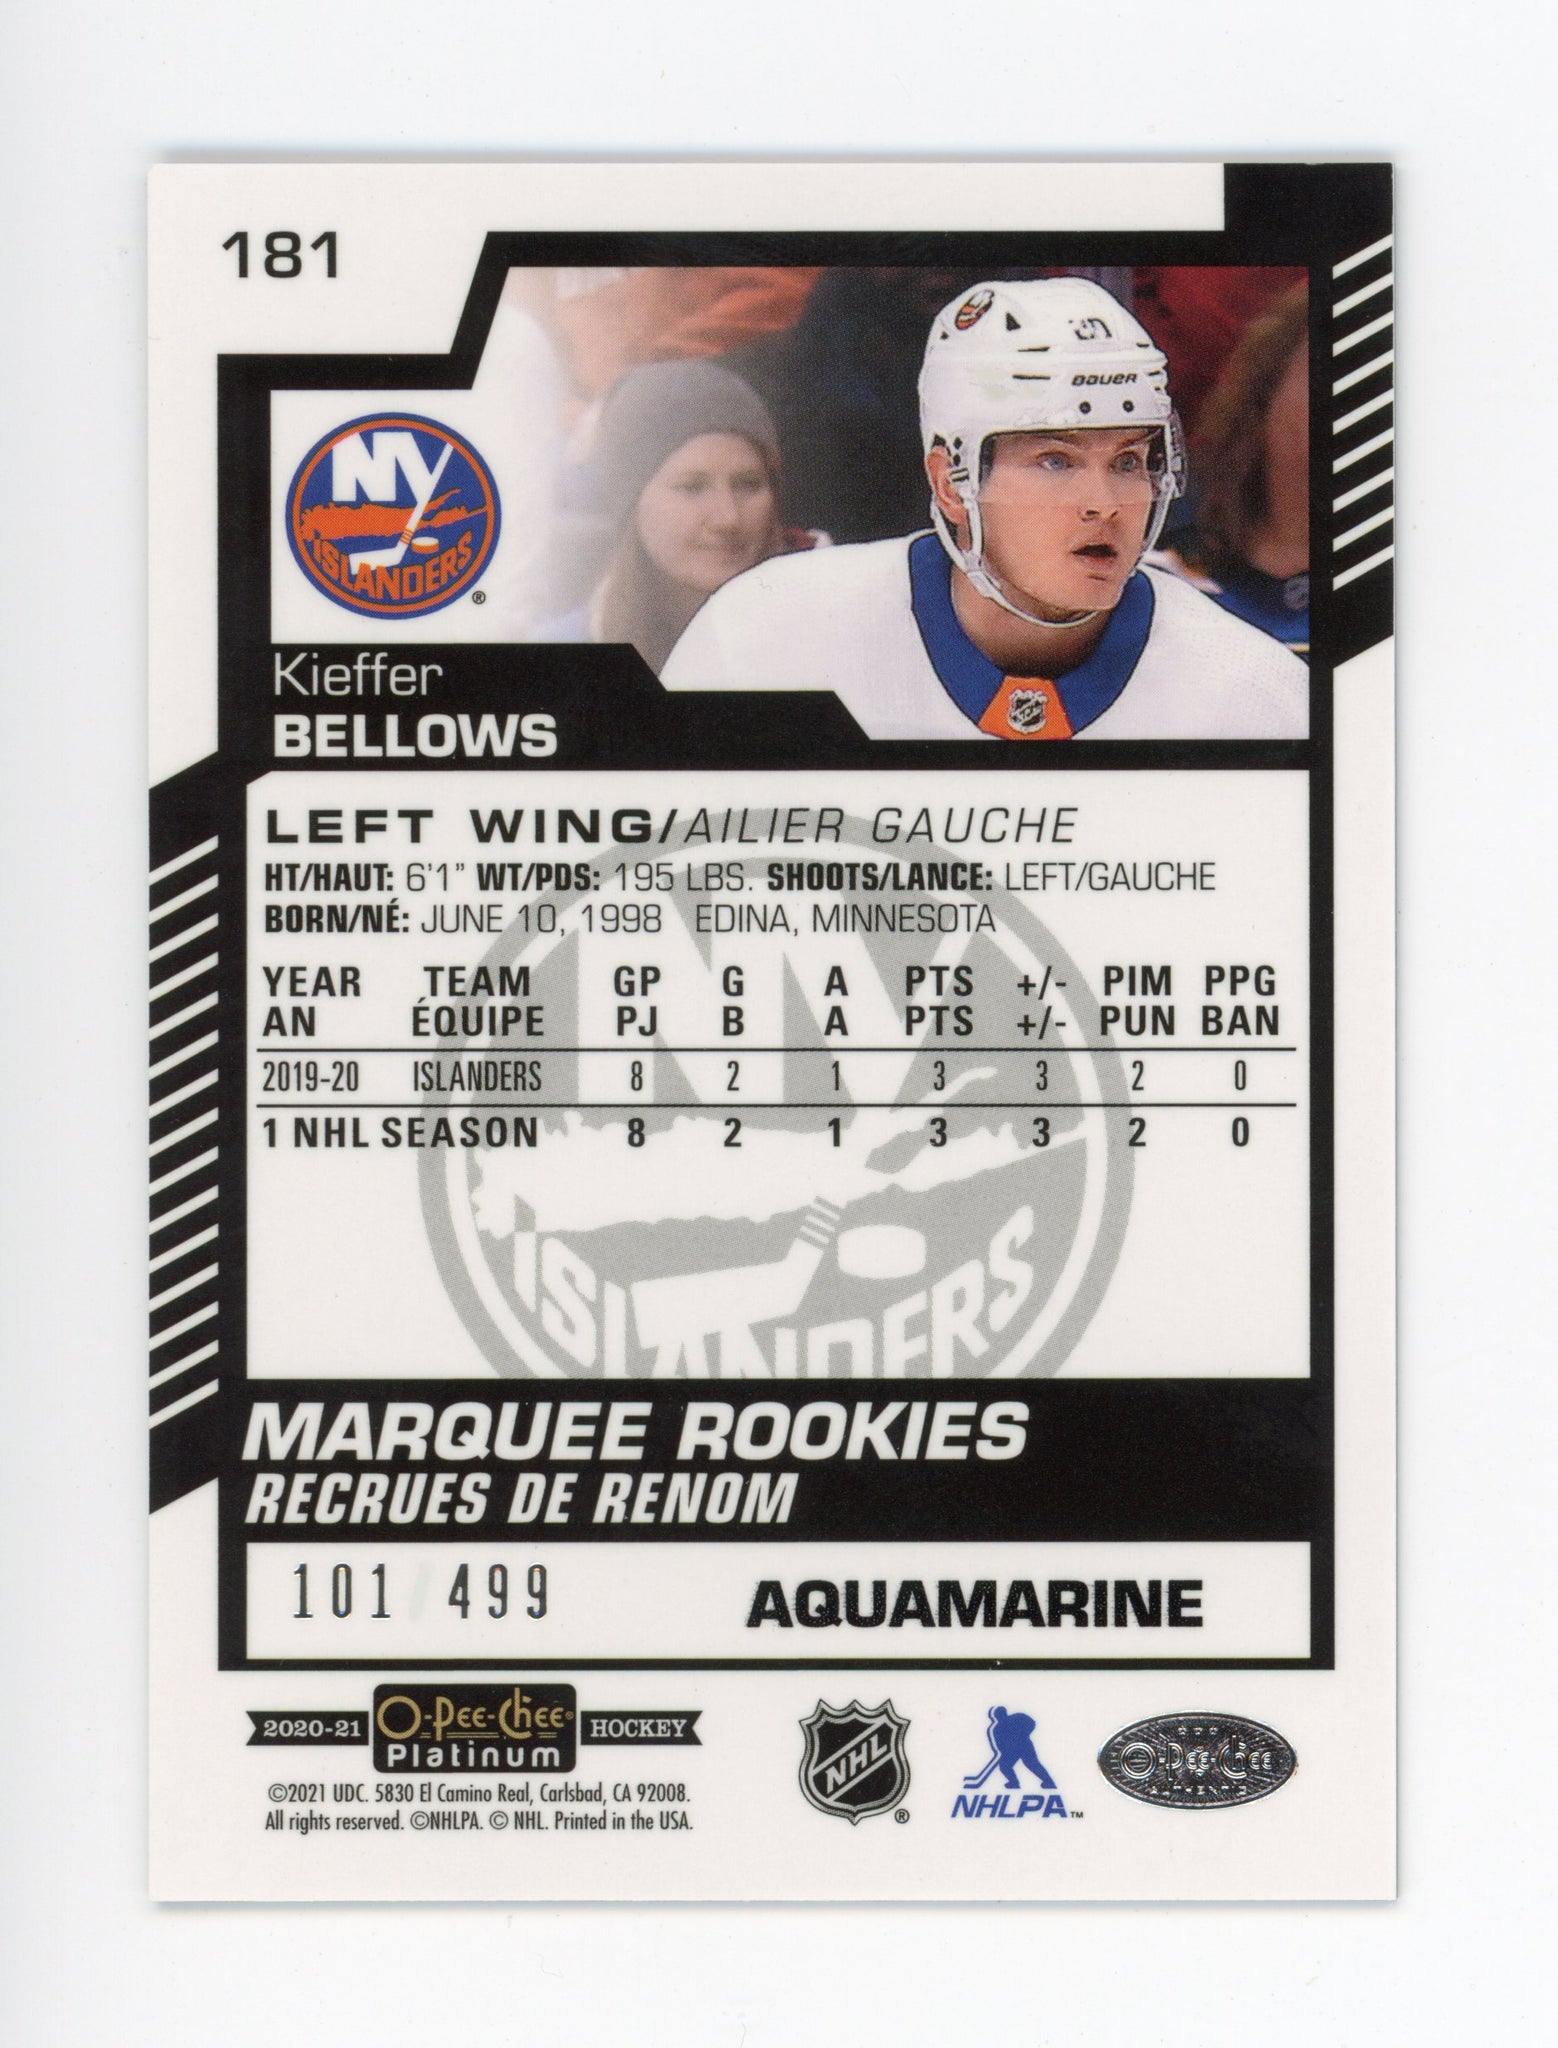 2020-2021 Kieffer Bellows Aquamarine #d /499 Marquee Rookies New York Islanders # 181